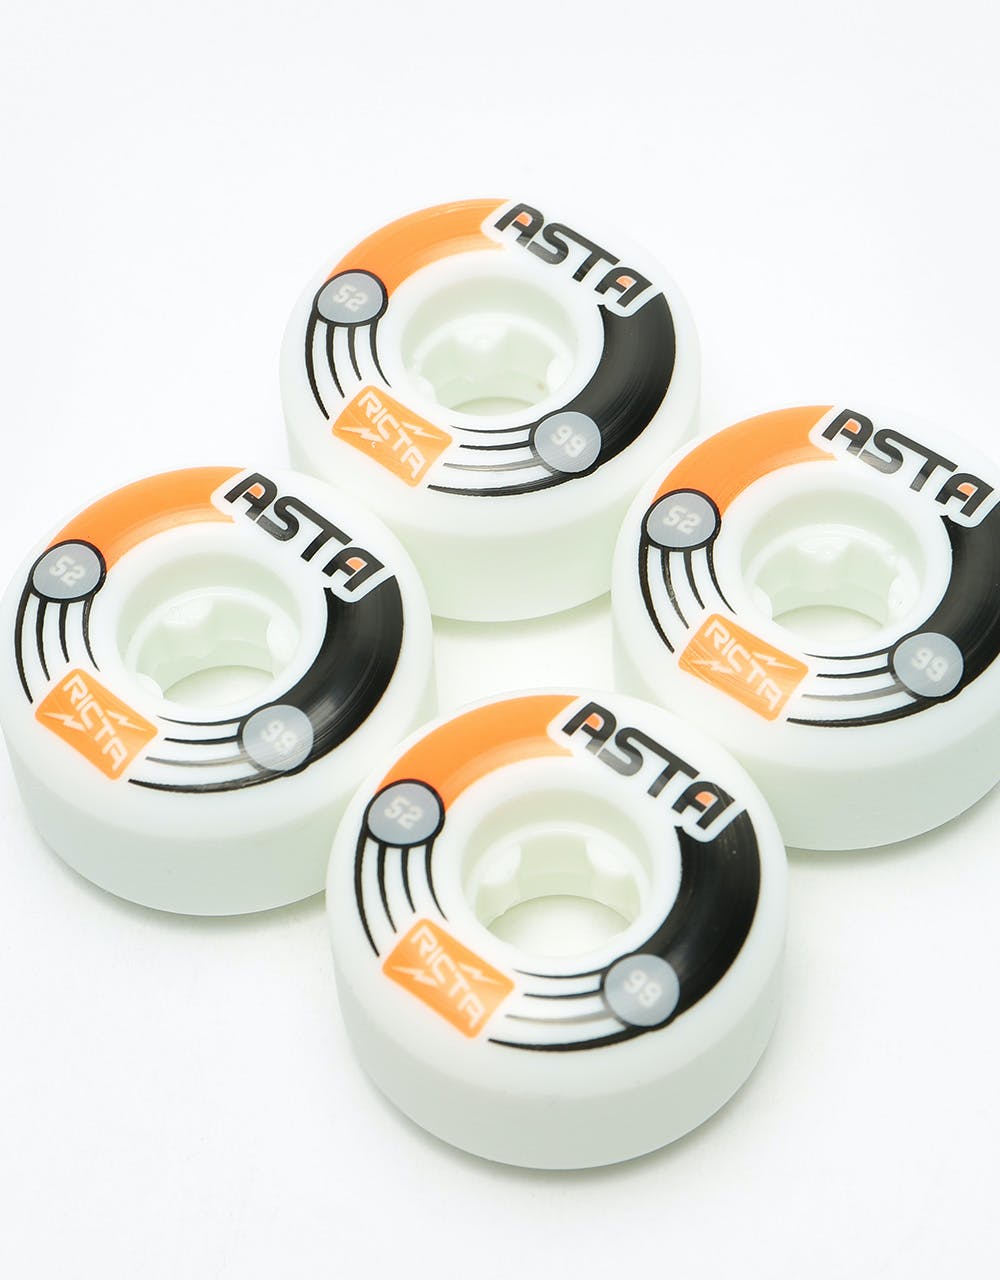 Ricta Asta Pro Slim 99a Skateboard Wheel - 52mm